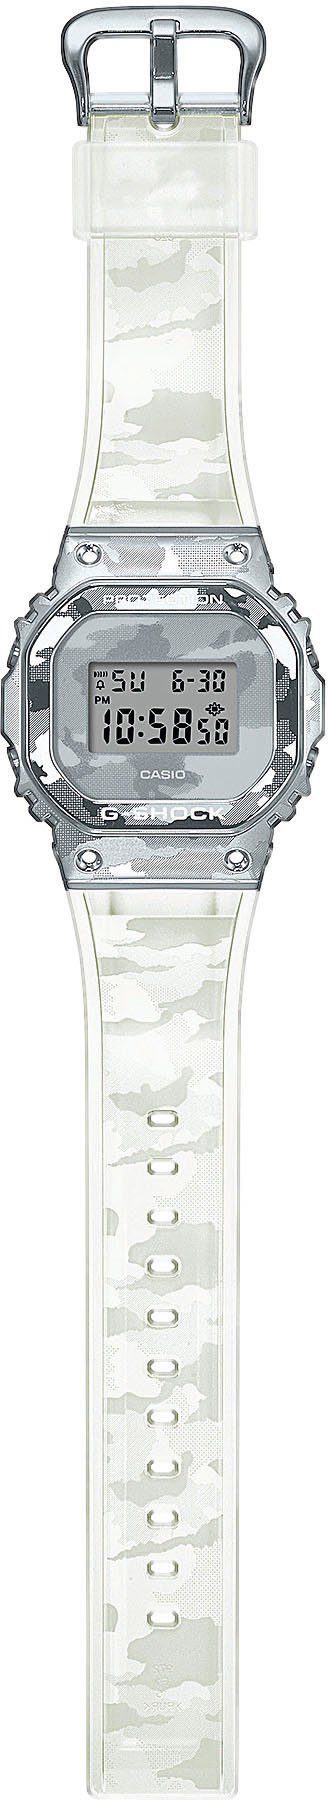 CASIO G-SHOCK Chronograph GM-5600SCM-1ER